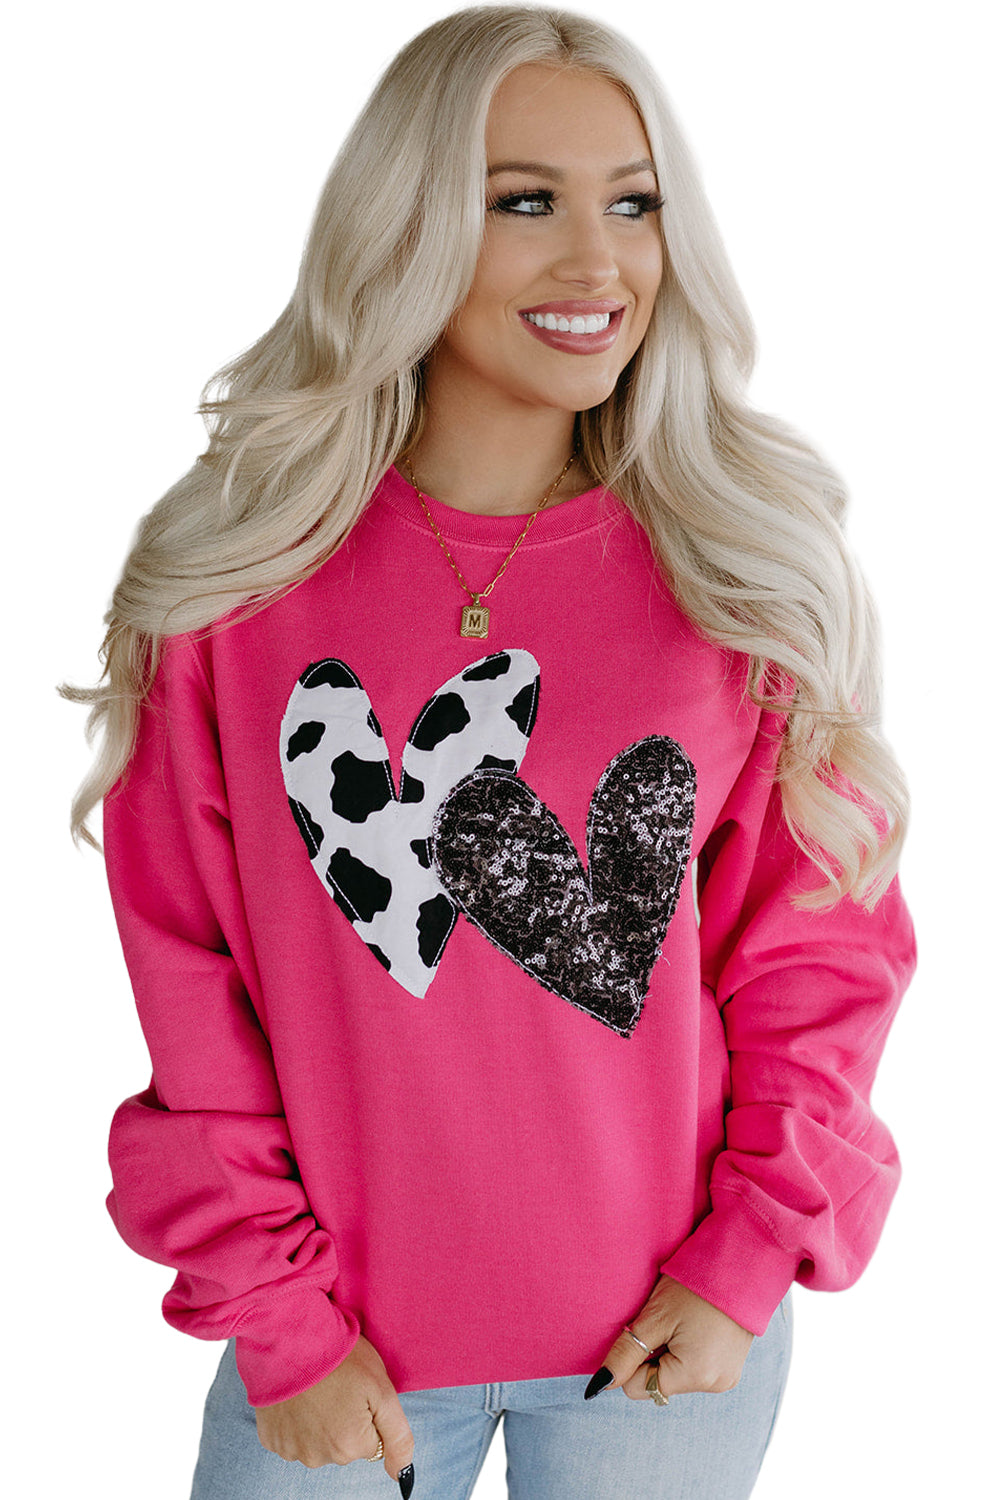 Strawberry Pink Cow & Sequin Double Heart Patch Graphic Sweatshirt - Scarlett's Riverside Boutique 